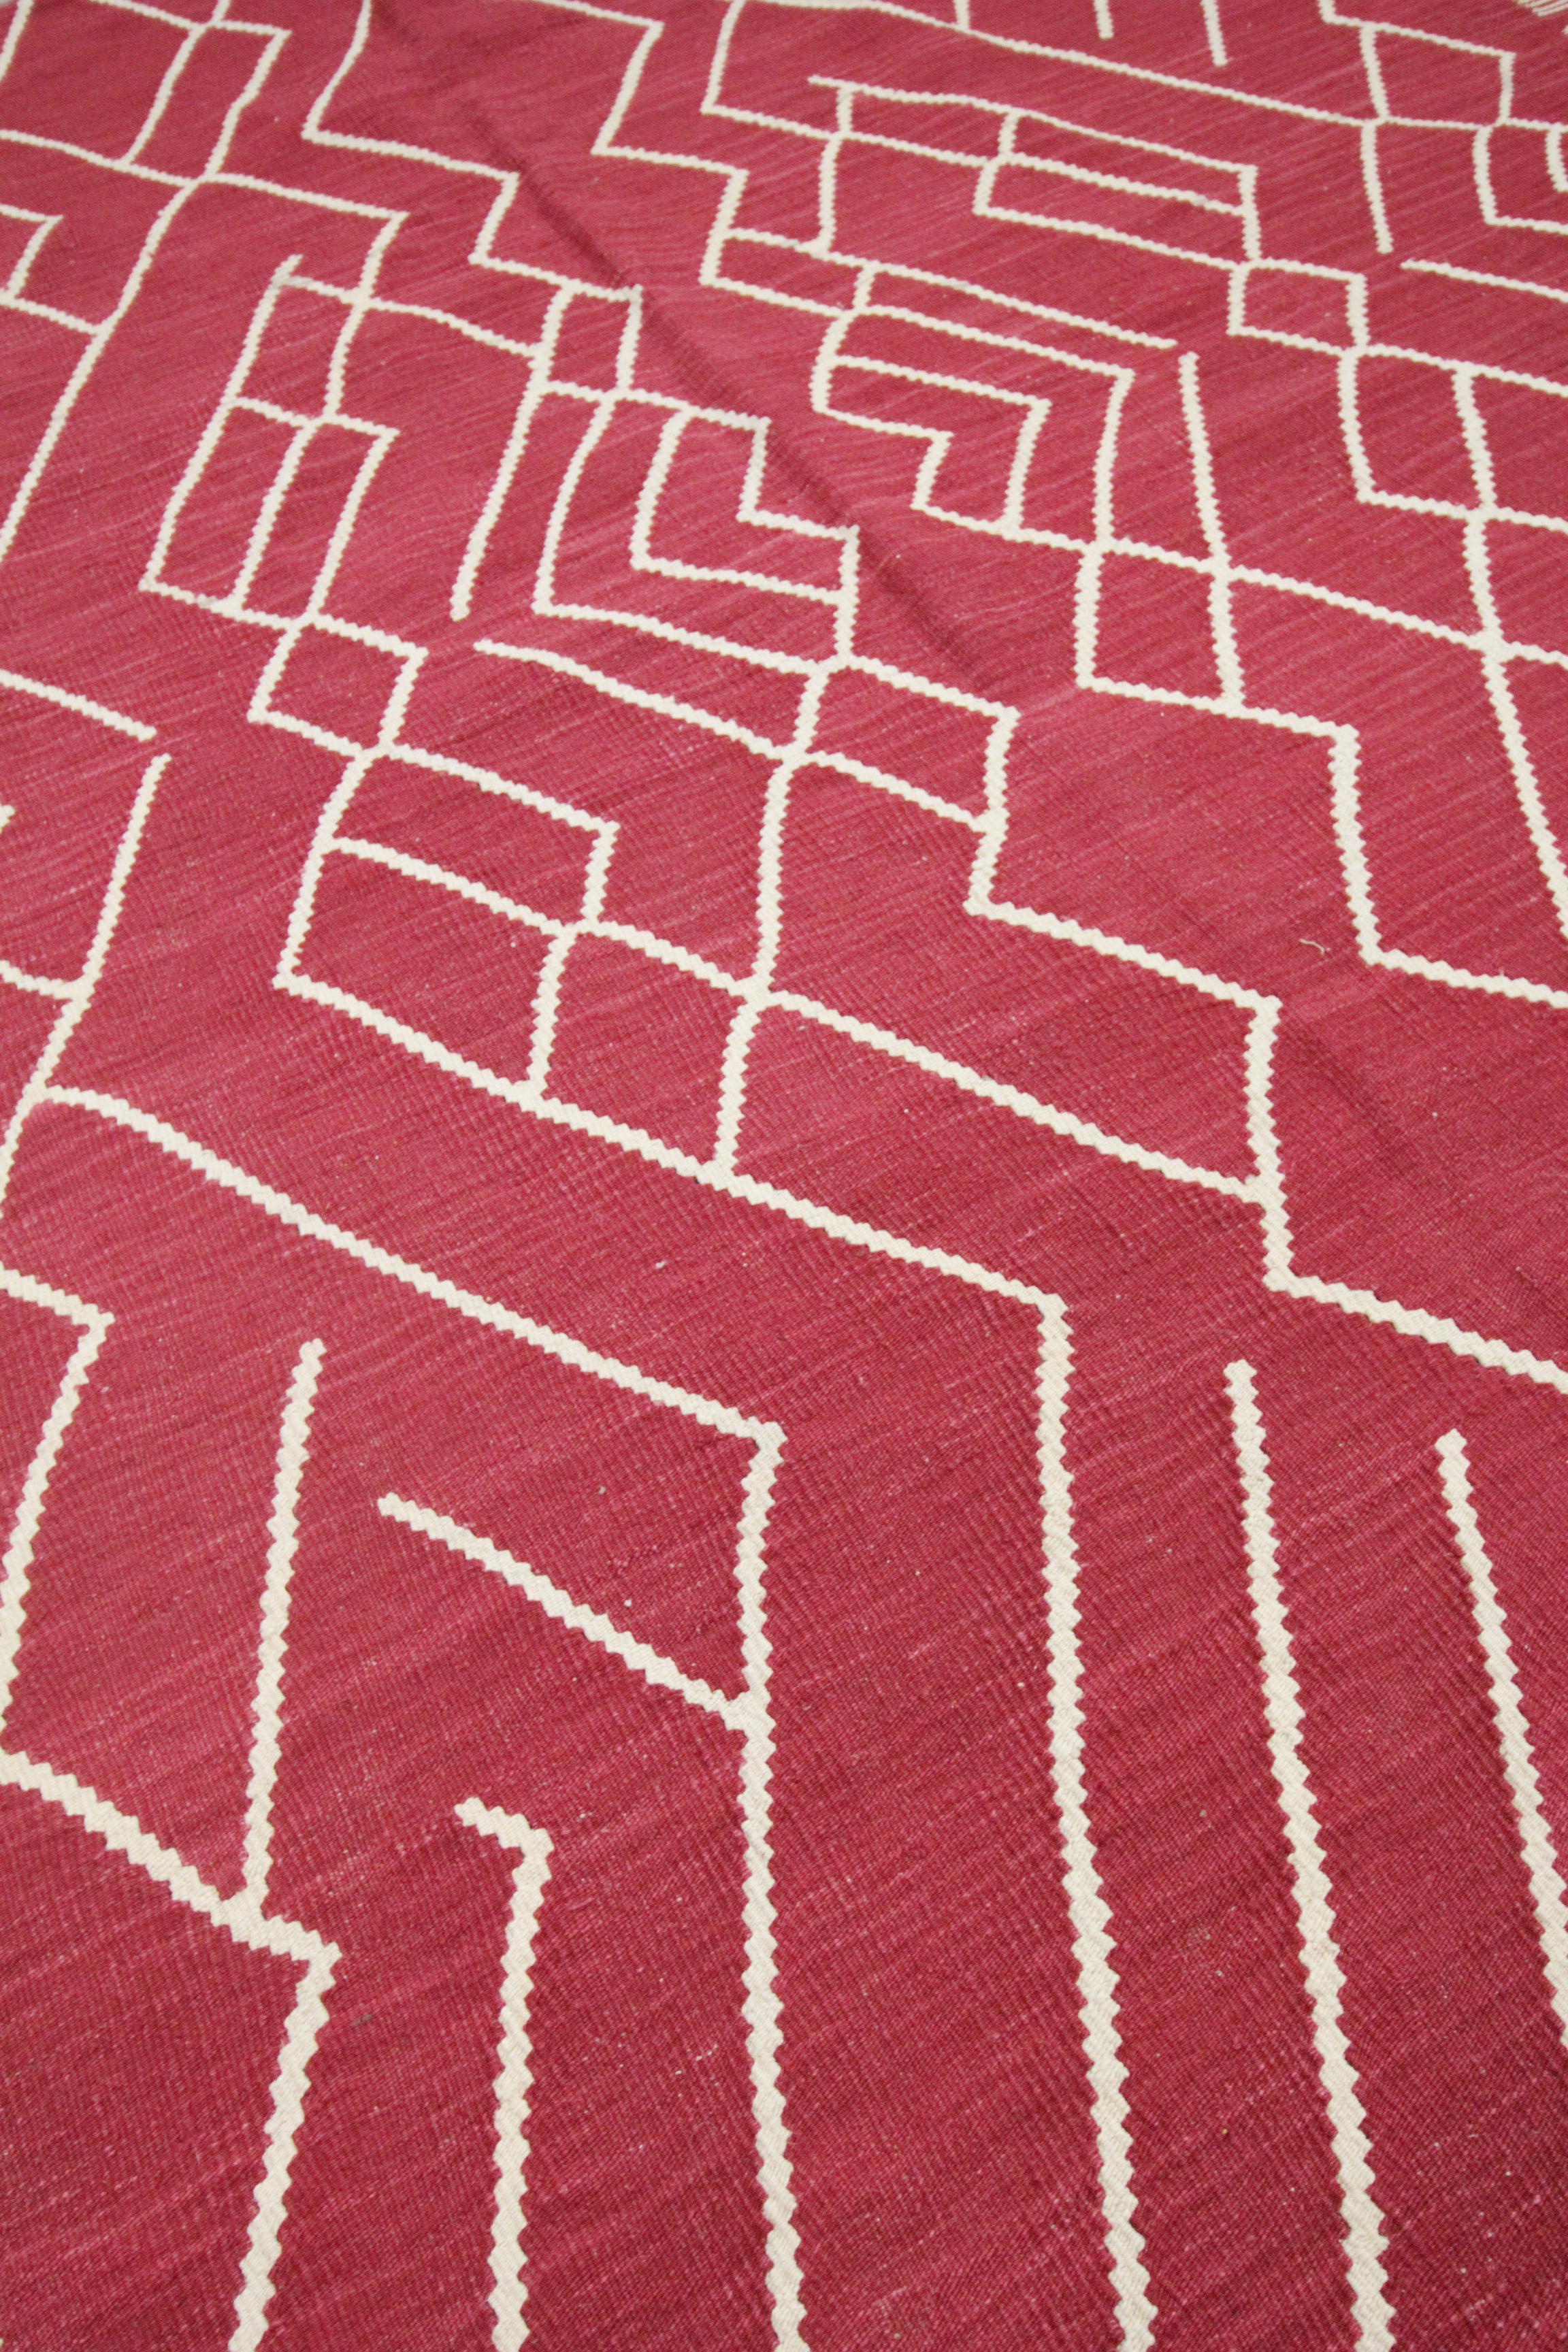 Afghan Modern Kilim Rug Handmade Geometric Scandinavian Style Kilim Area Rug